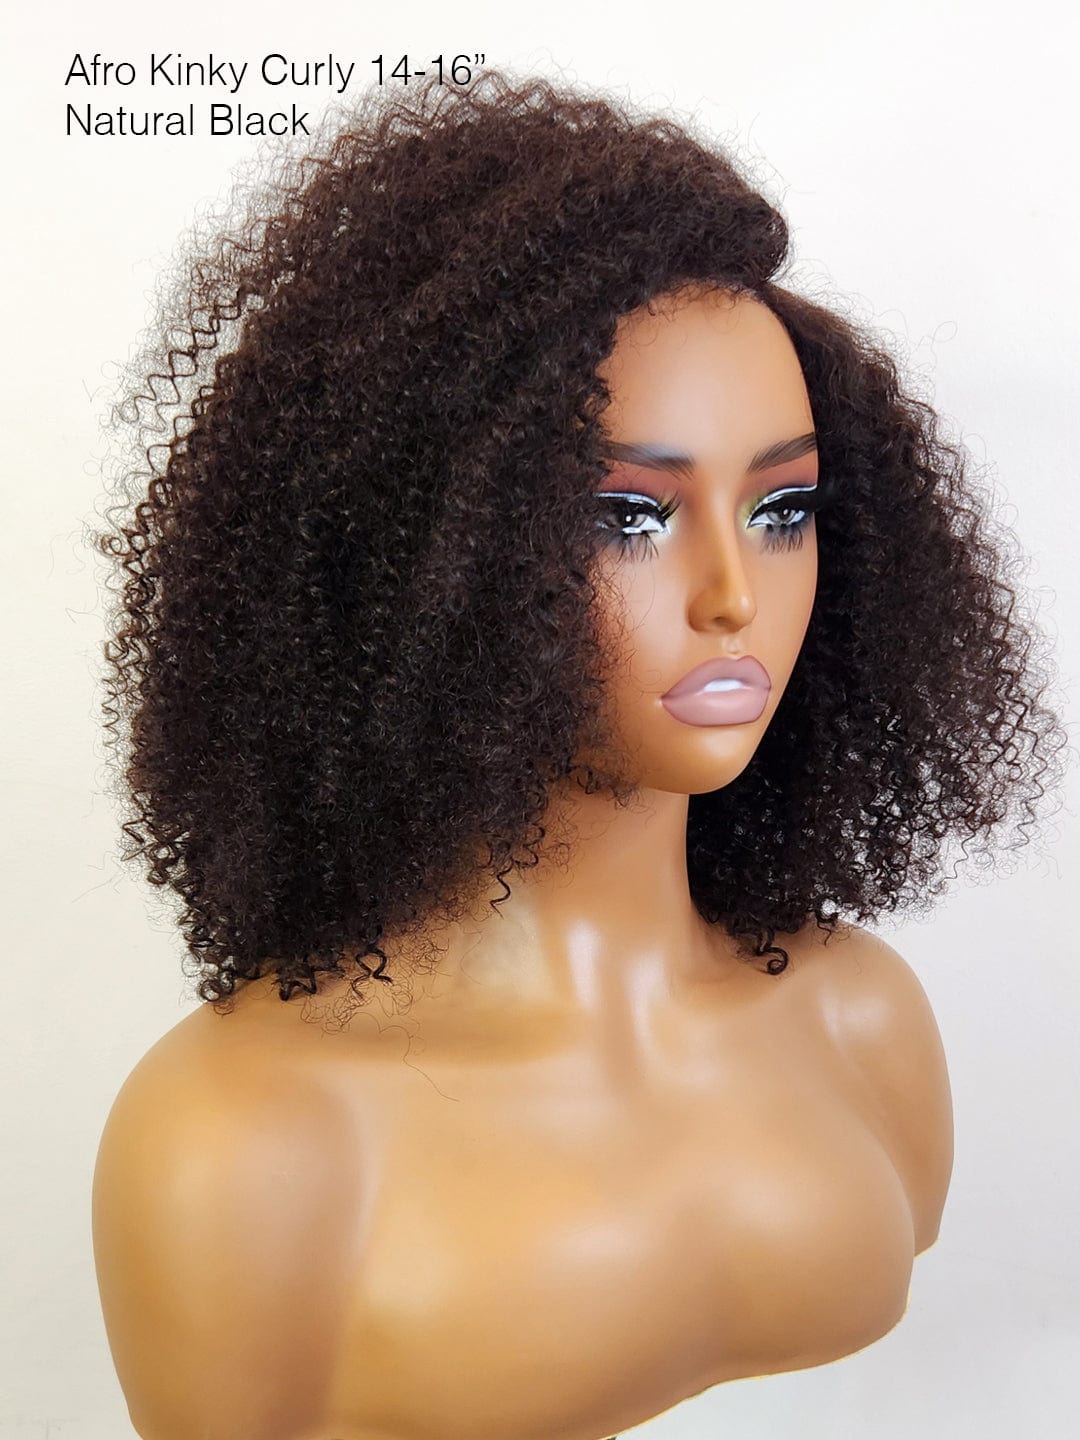 Brooklyn Hair Small Knots 5x5 HD Pre Cut Lace Glueless Wig Afro Kinky Curly